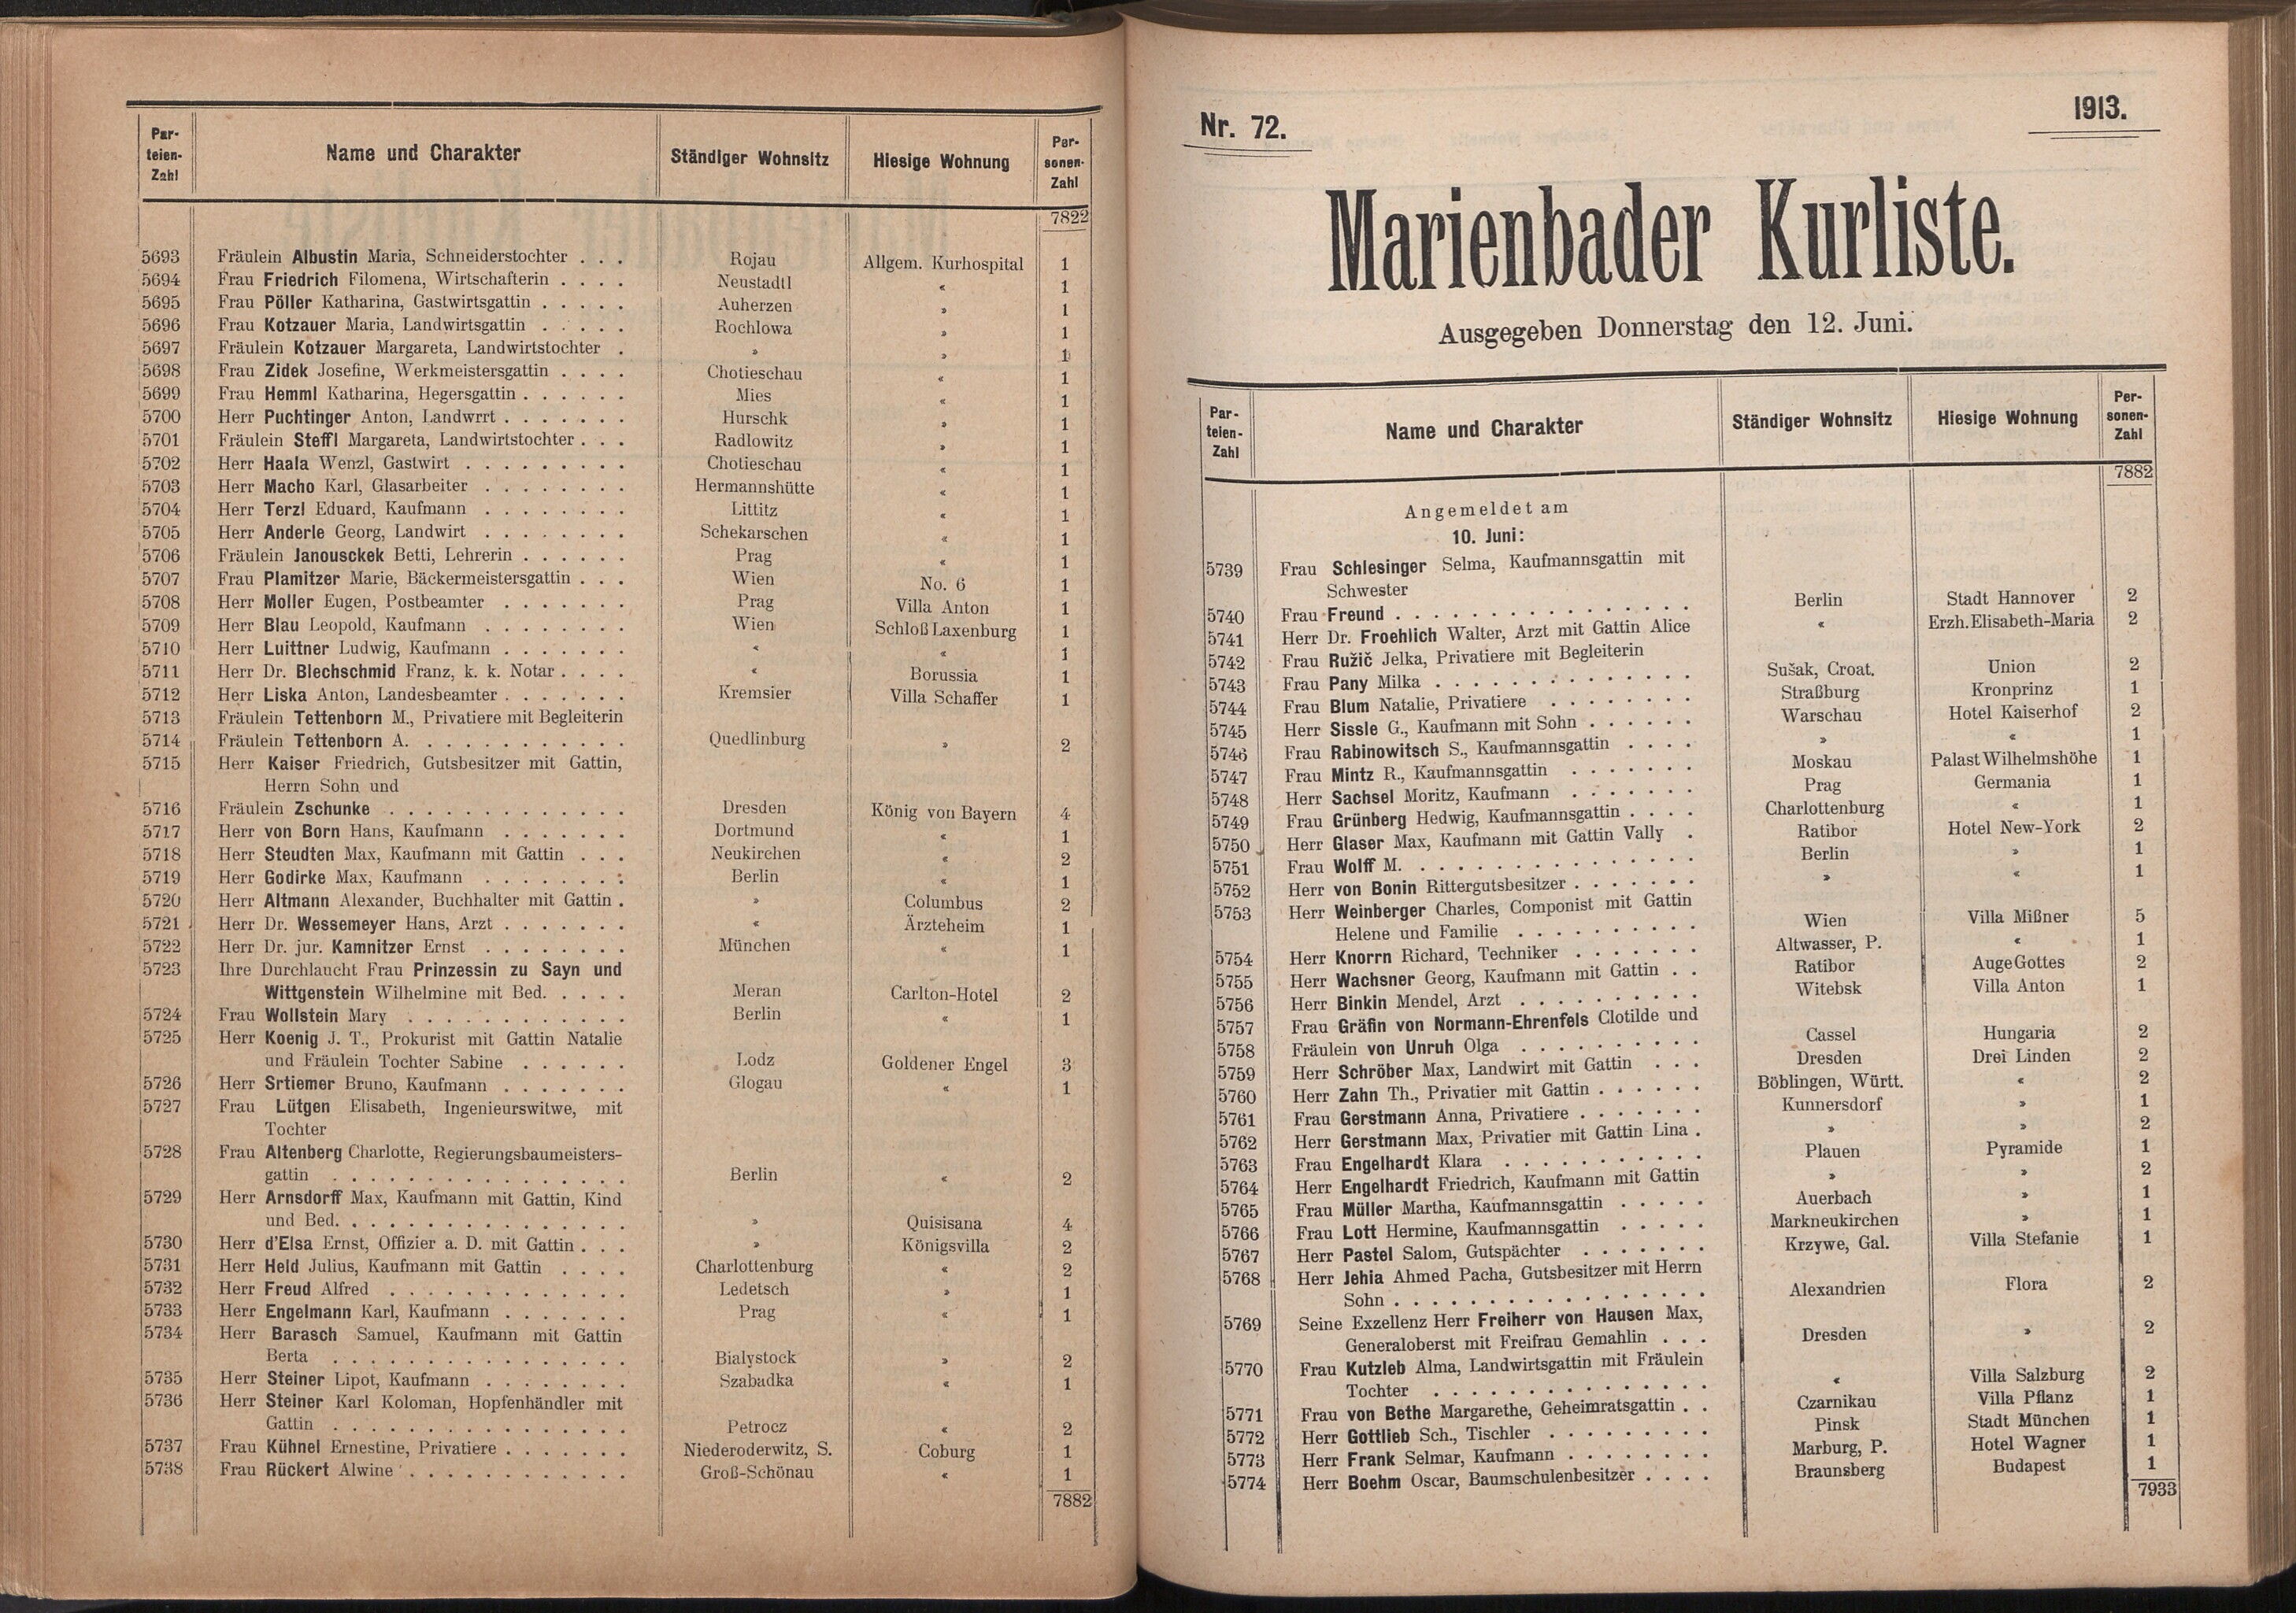 89. soap-ch_knihovna_marienbader-kurliste-1913_0890